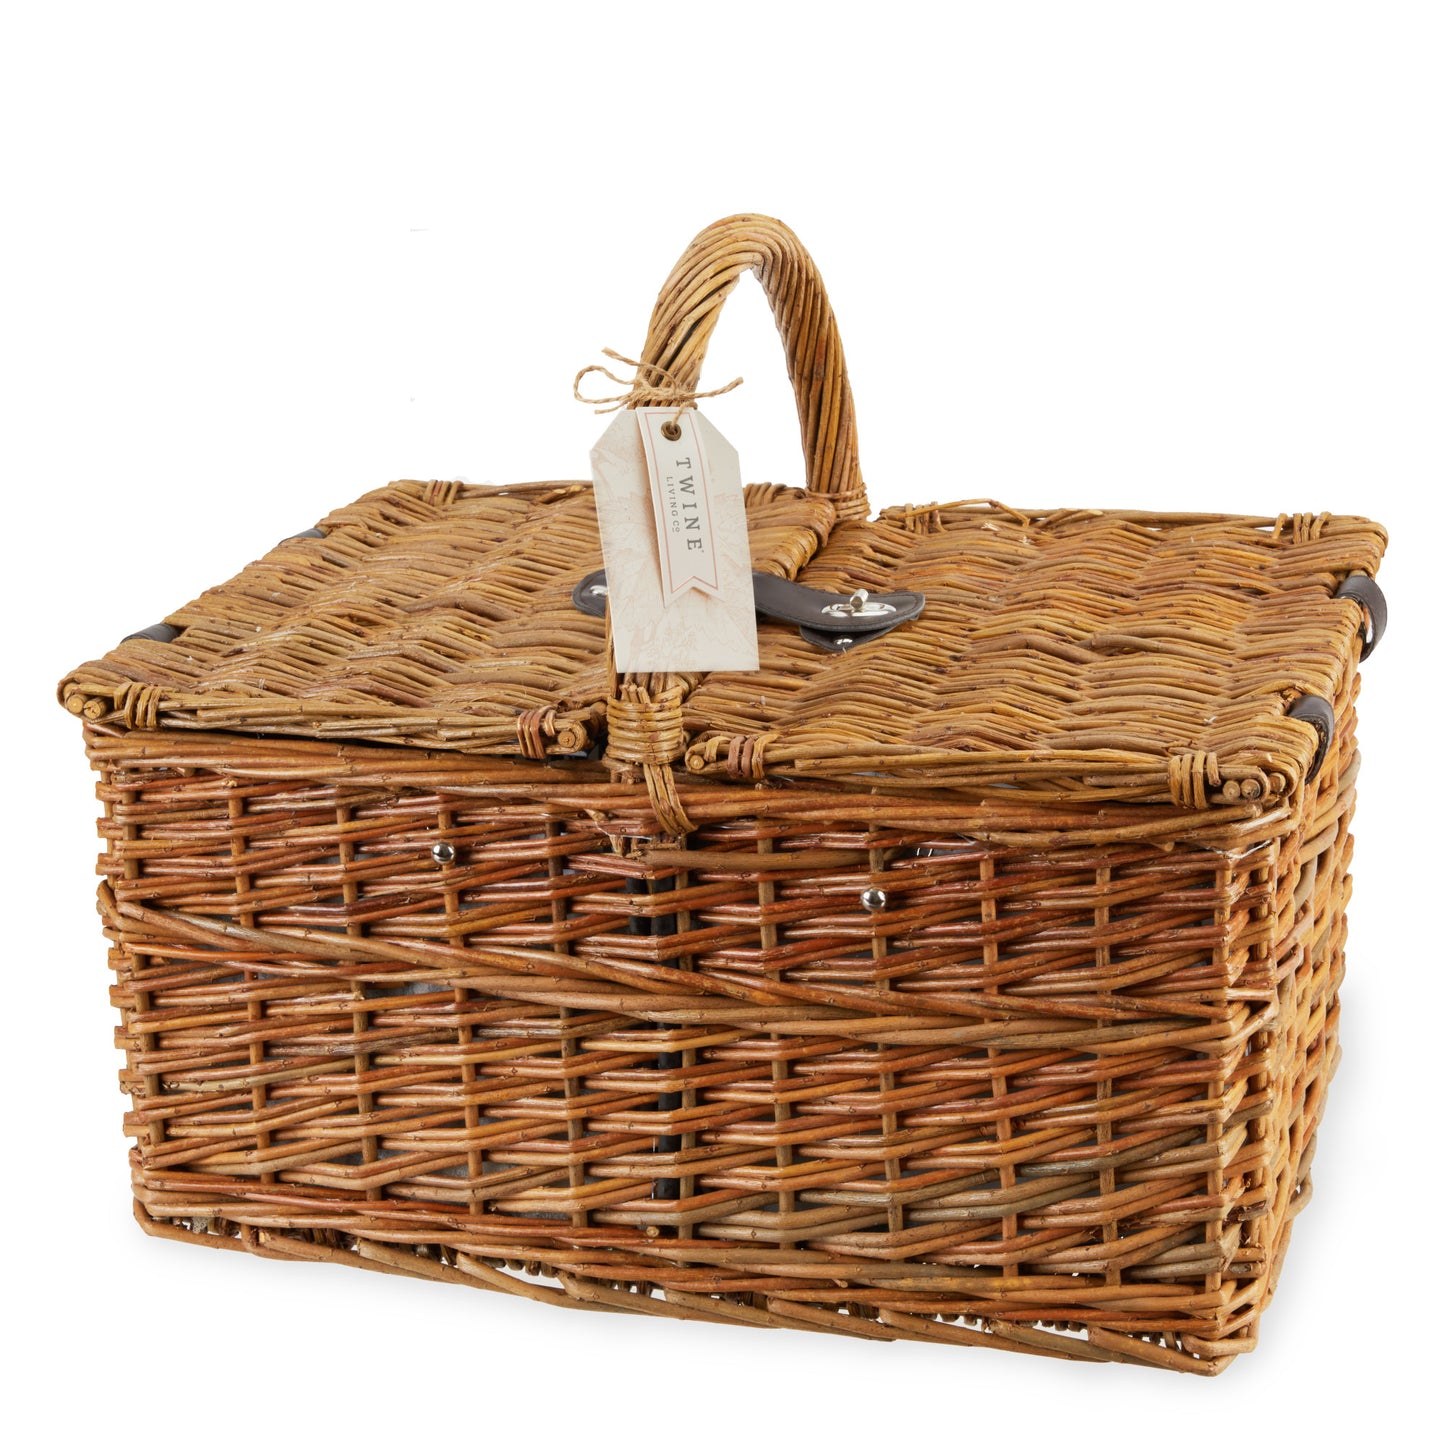 Cape Cod Wicker Picnic Basket by Twine®